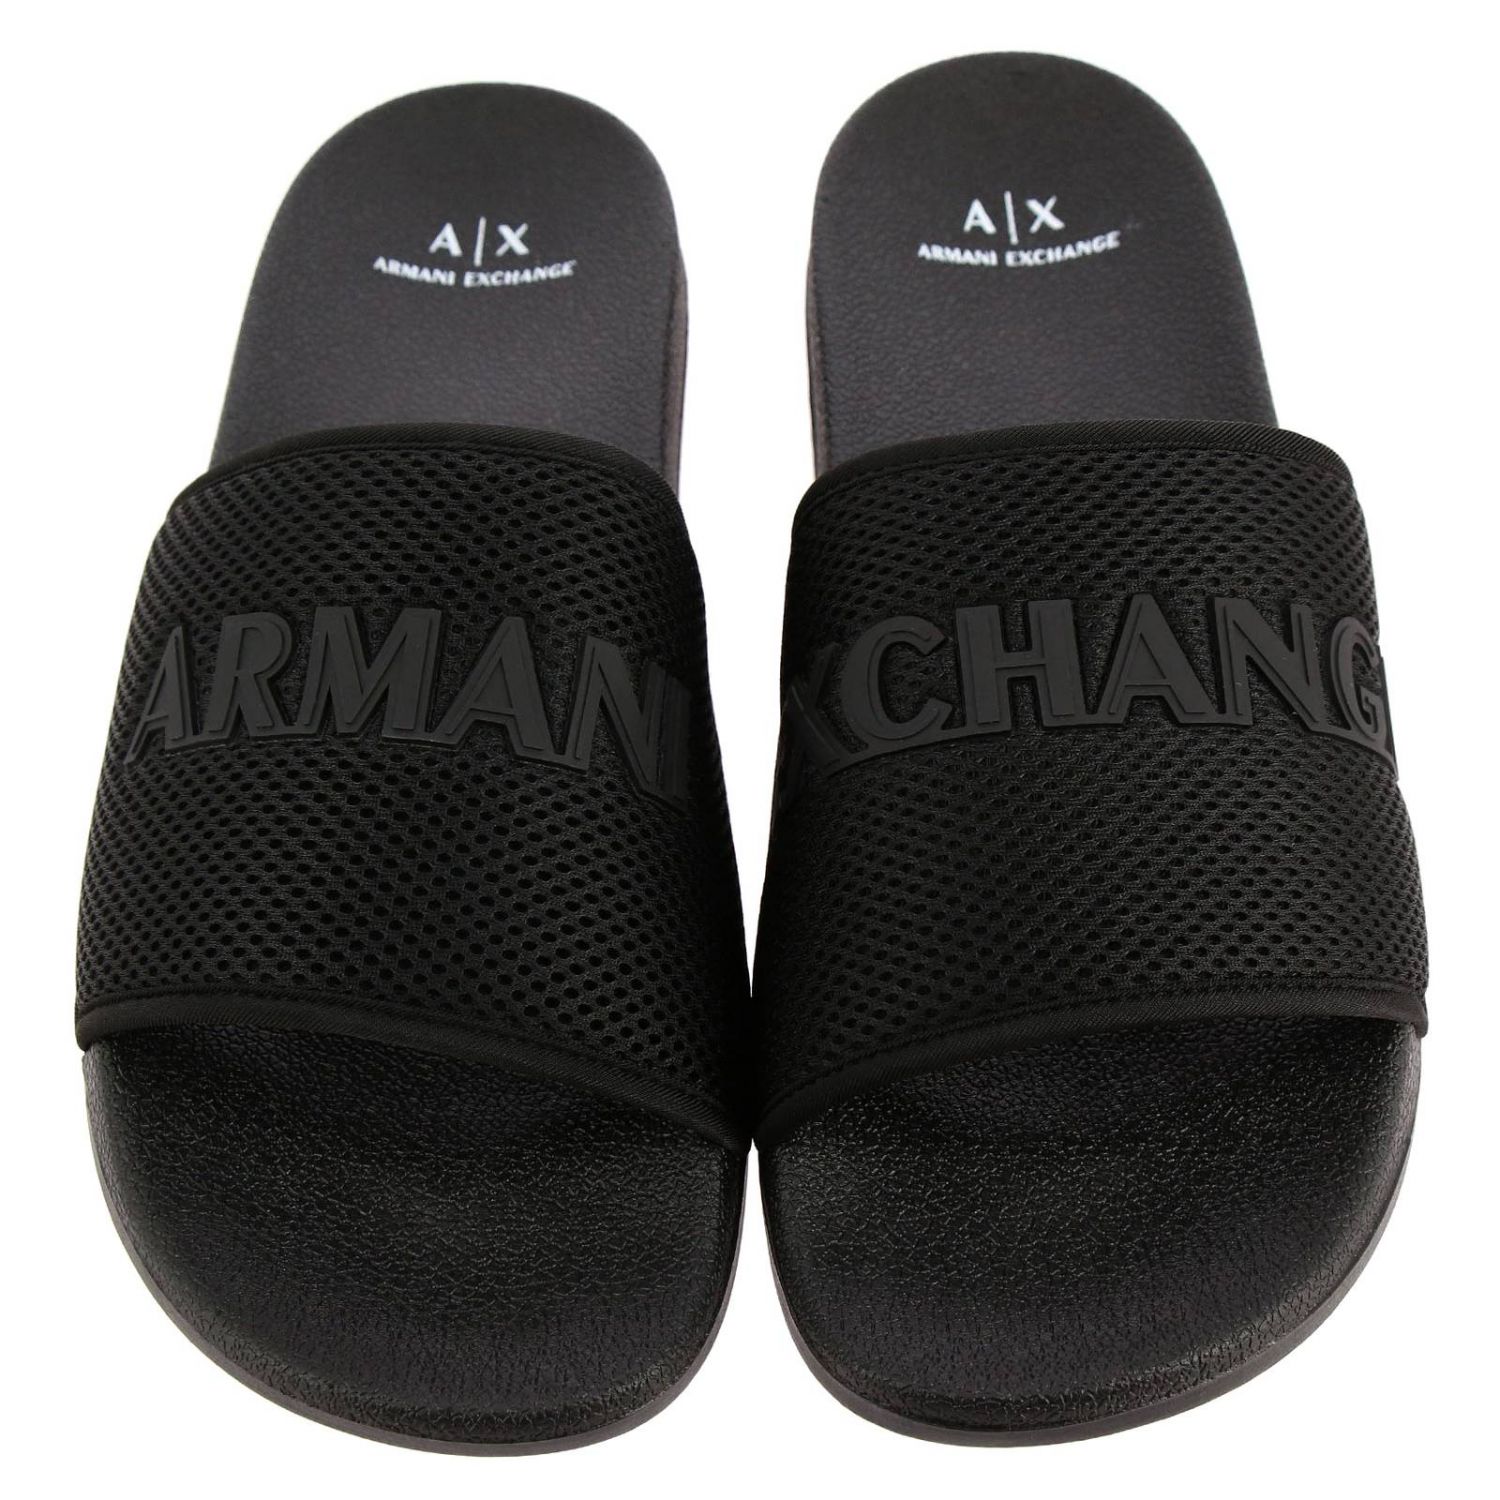 armani exchange sandals mens